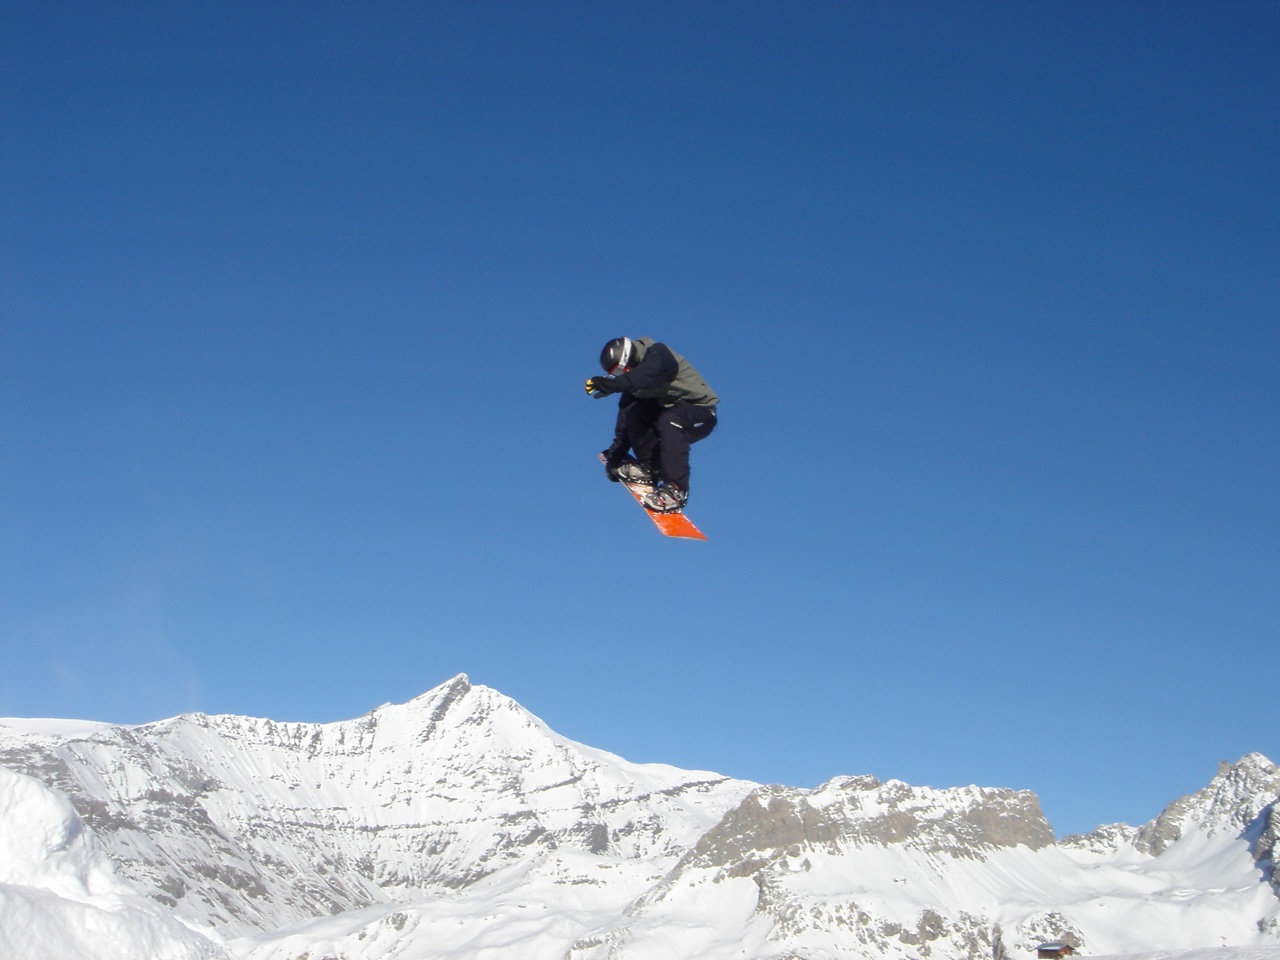 Ski jump image from wikimedia